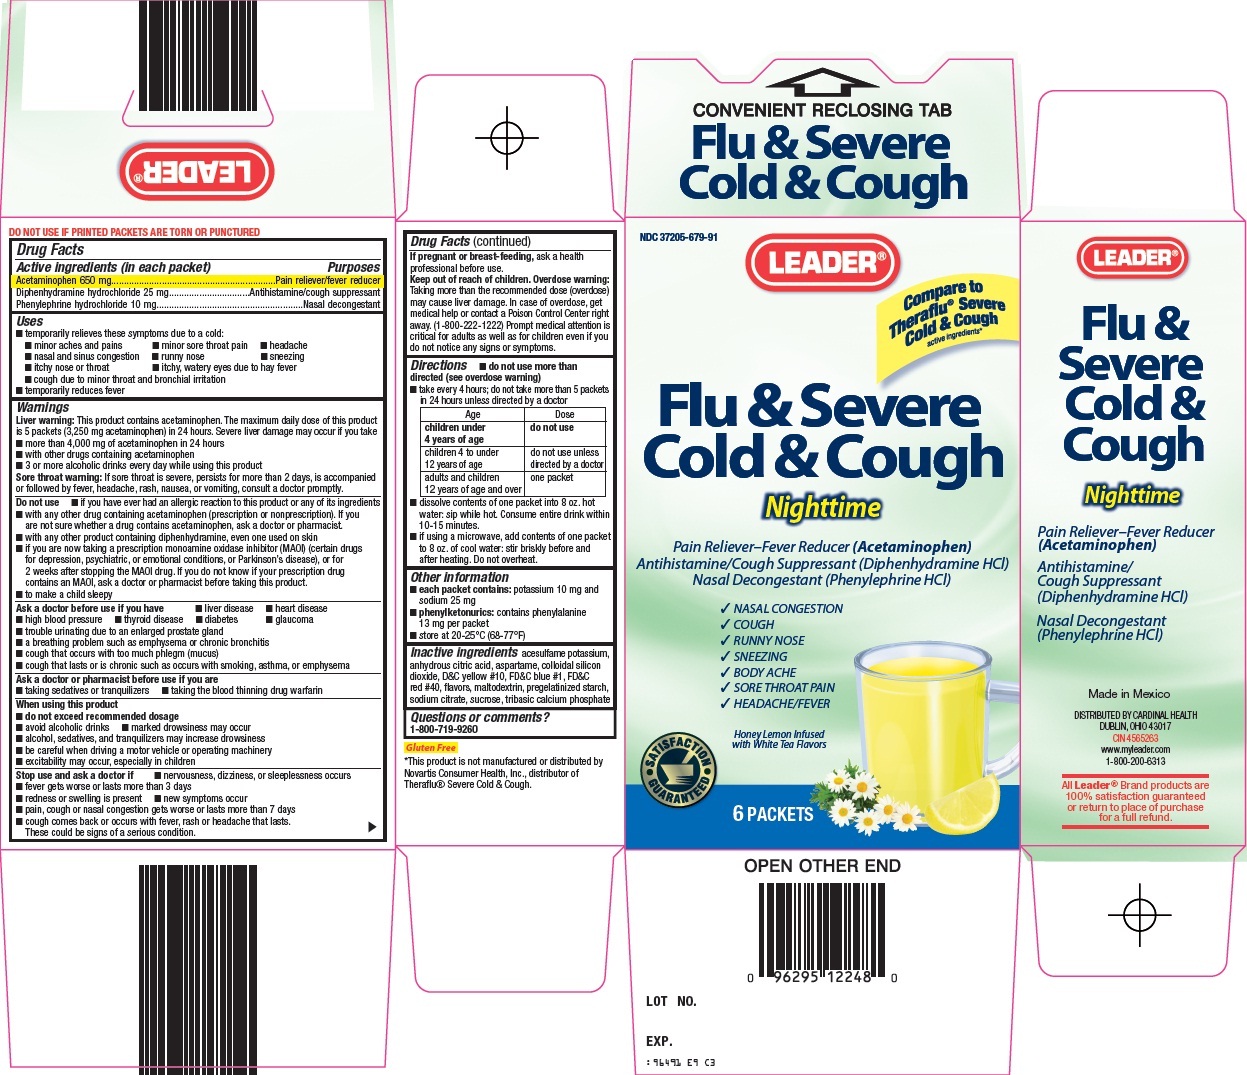 Cardinal Health Flu & Severe Cold & Cough